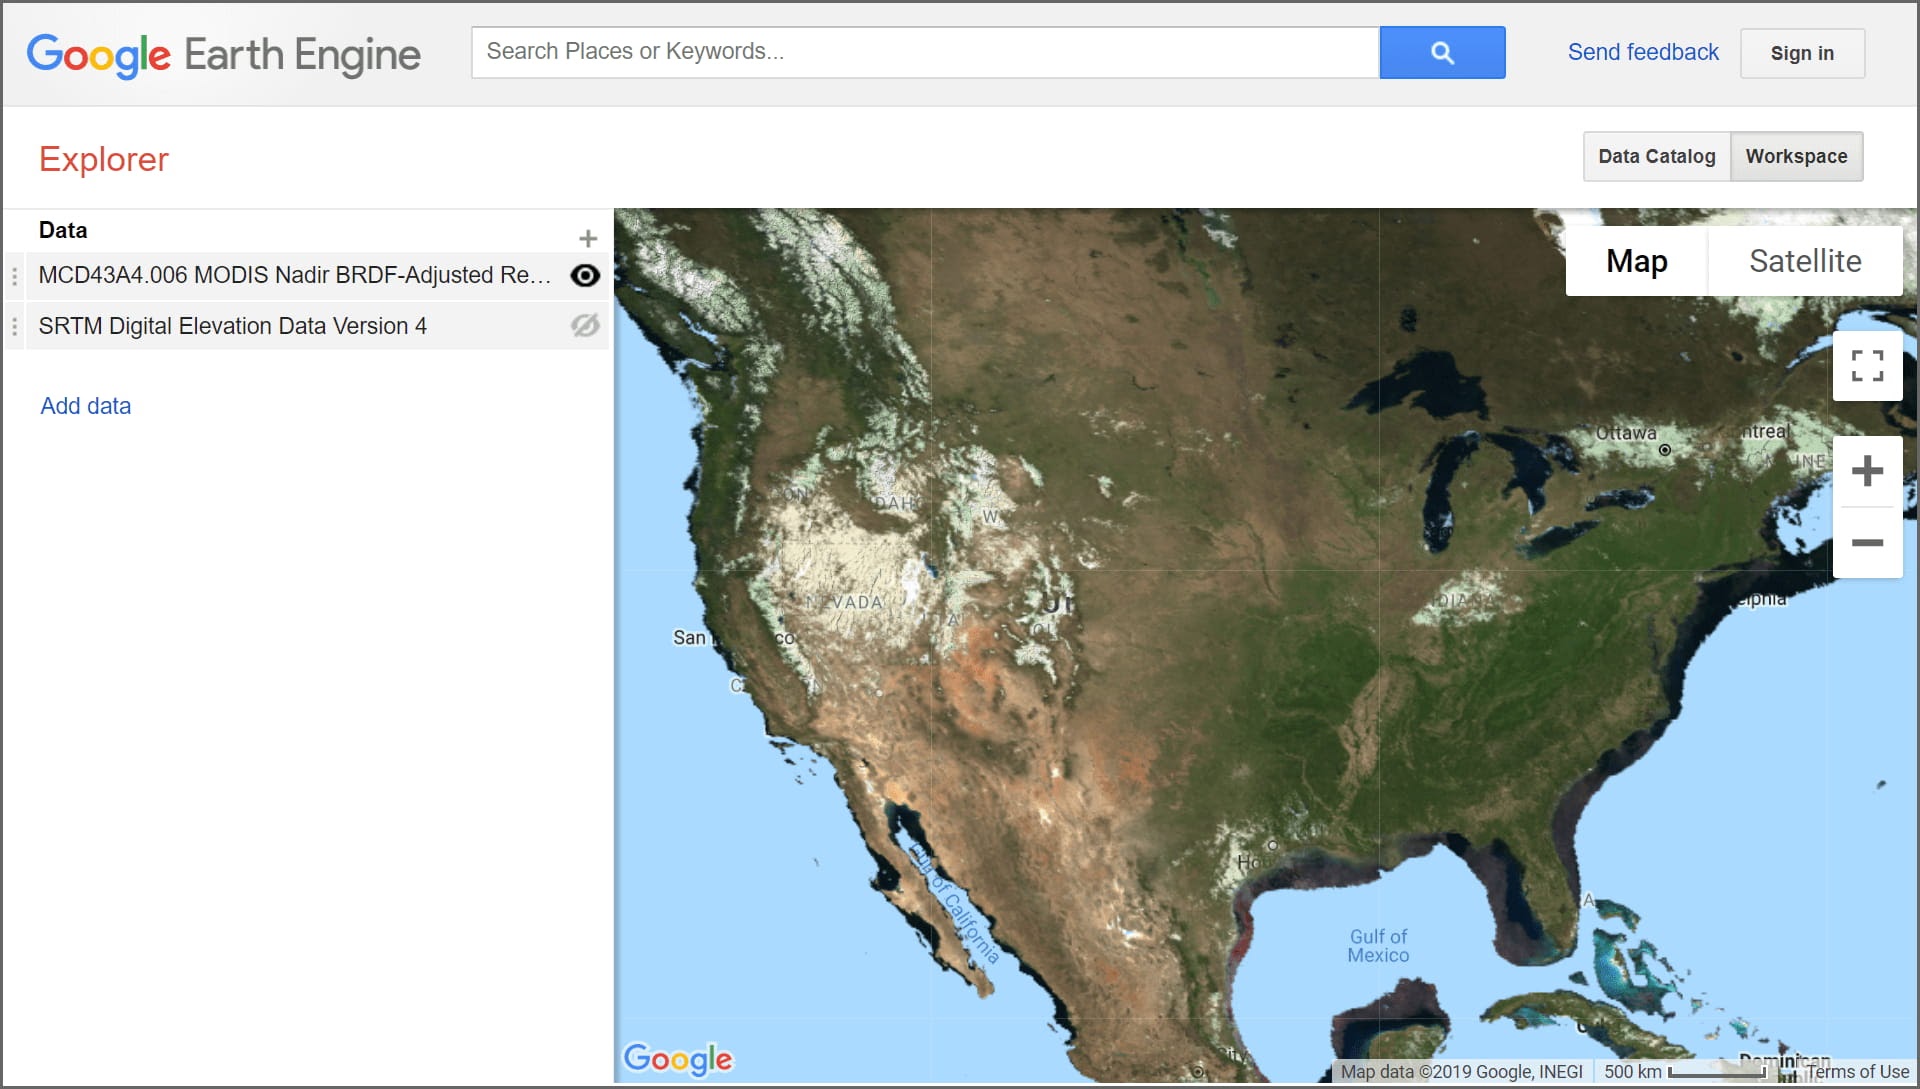 google earth engine explorer data map satellite